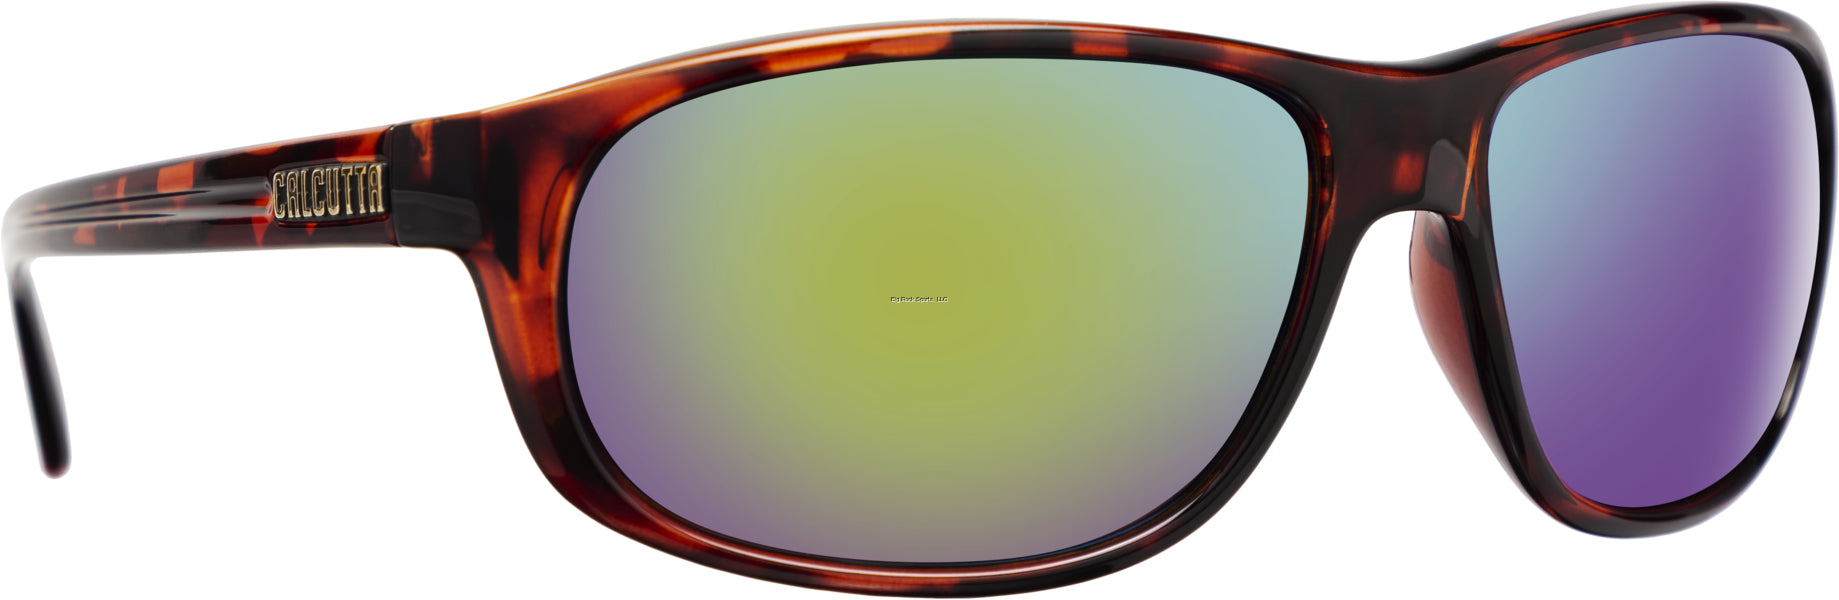 Calcutta Walker Discover Series Sunglasses